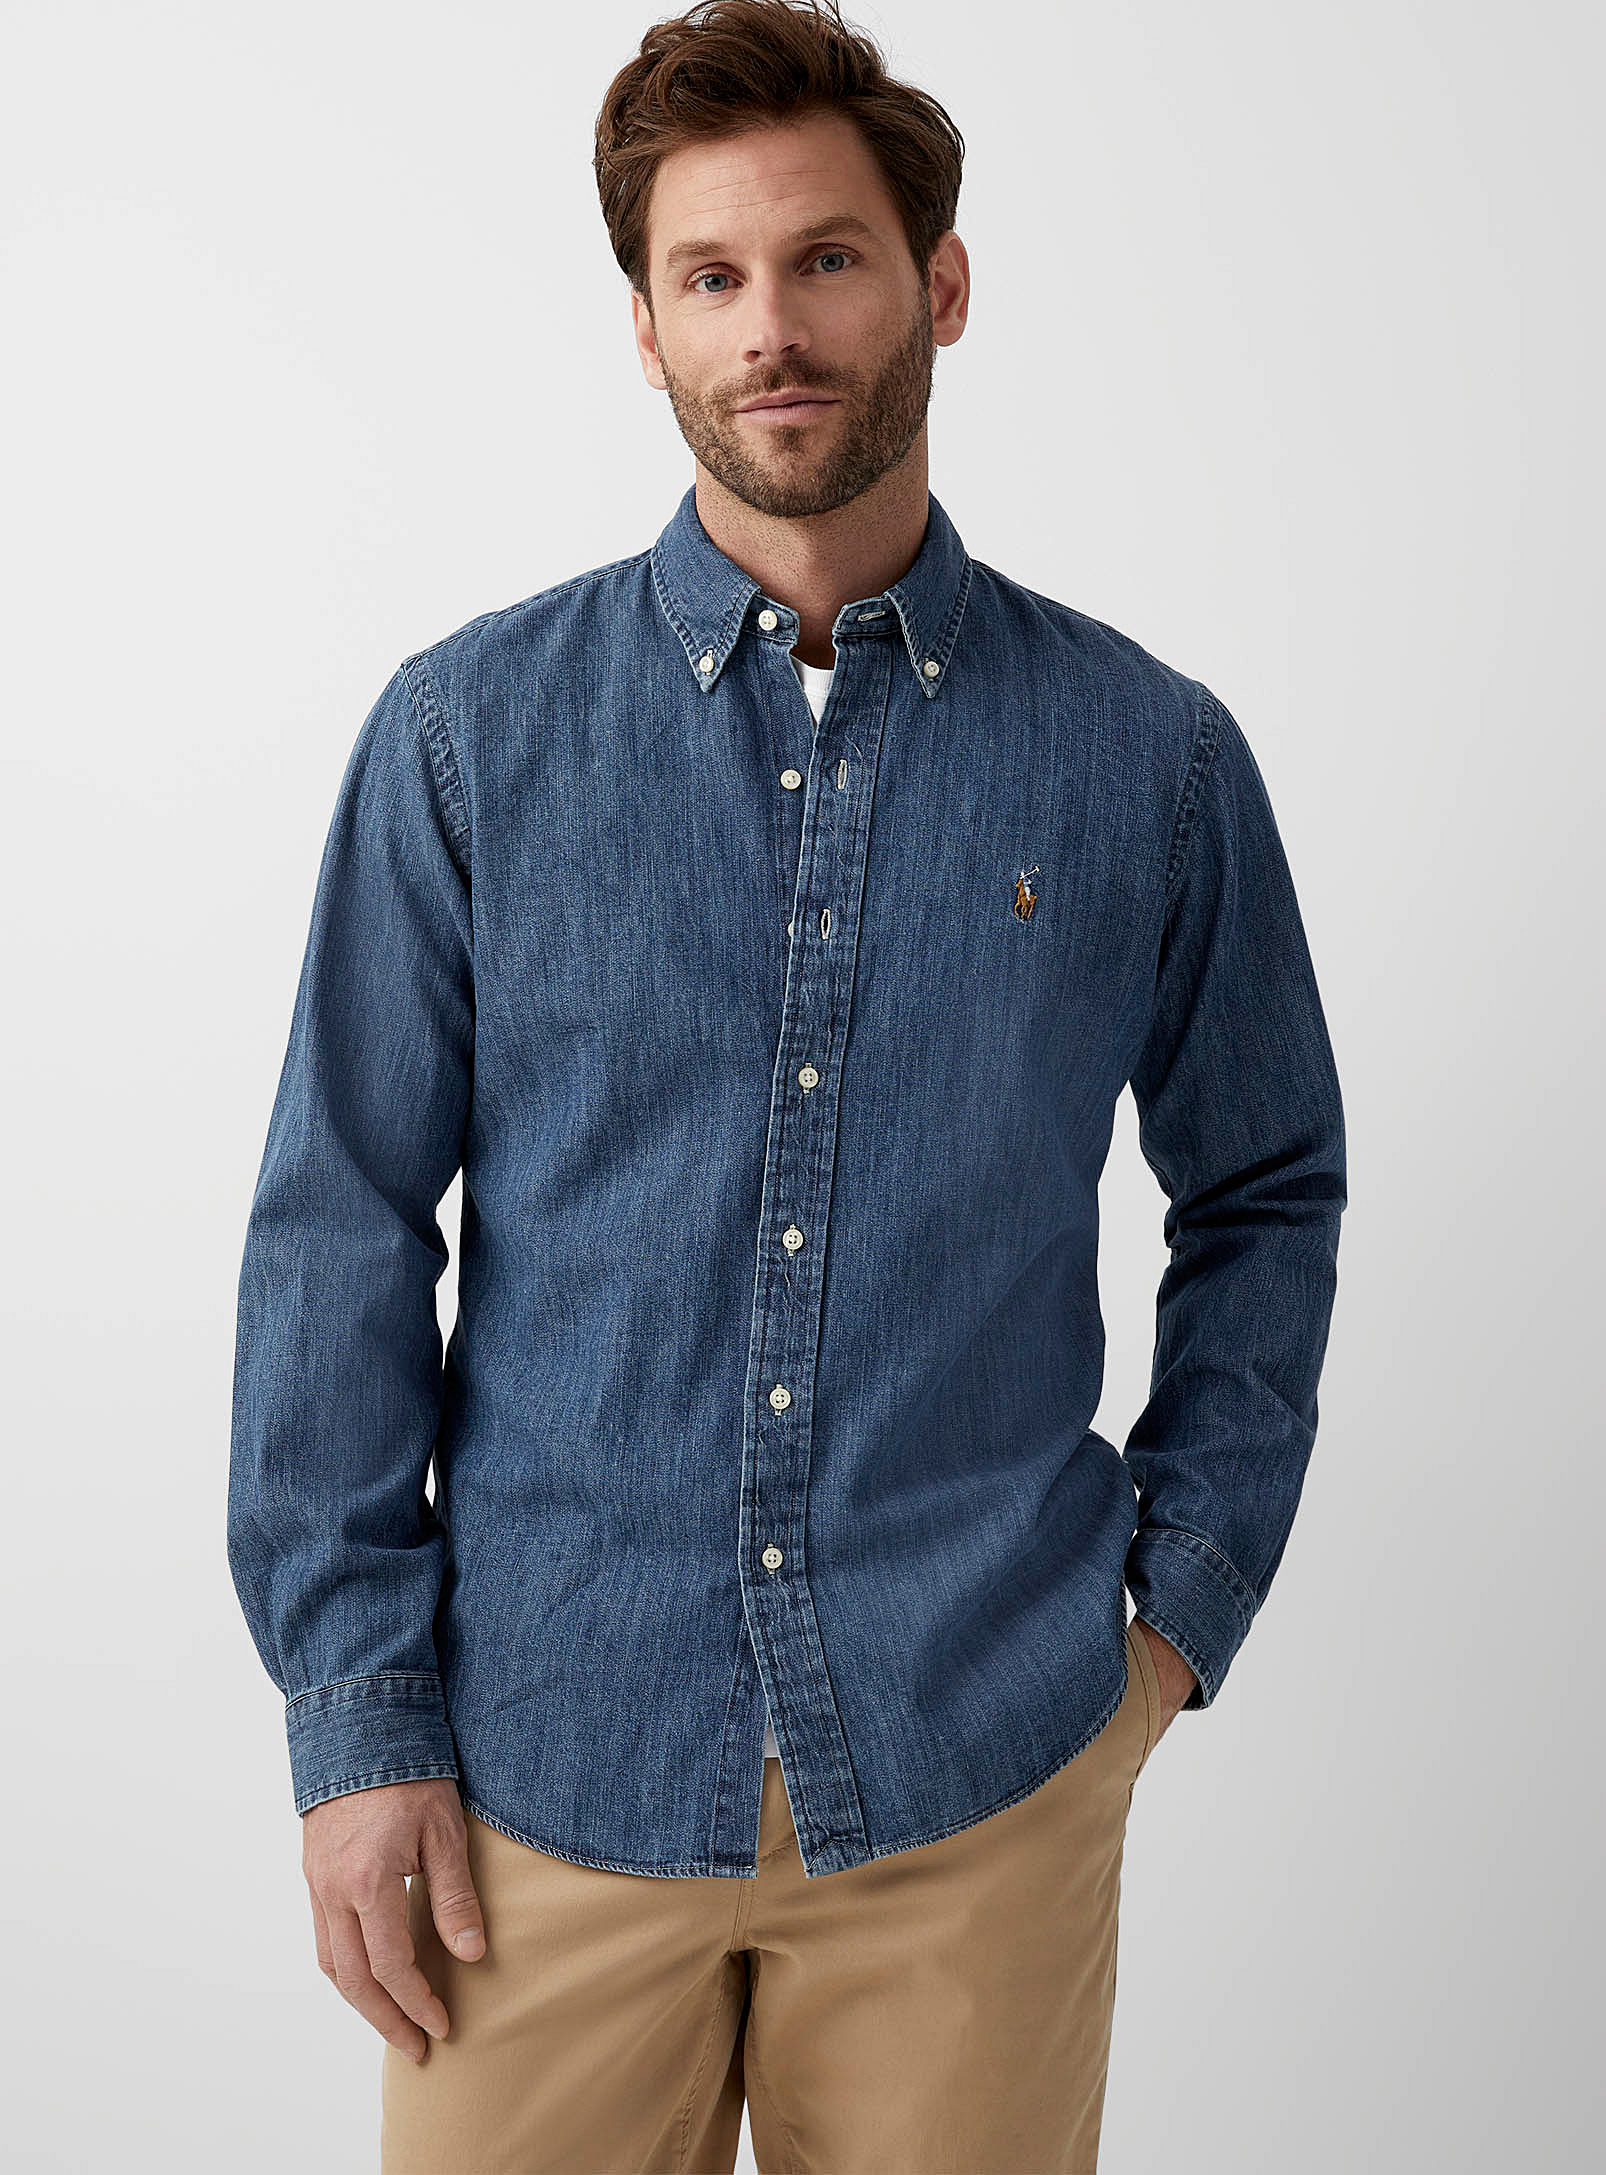 Polo shirt Ralph Lauren - Men's Minimalist denim